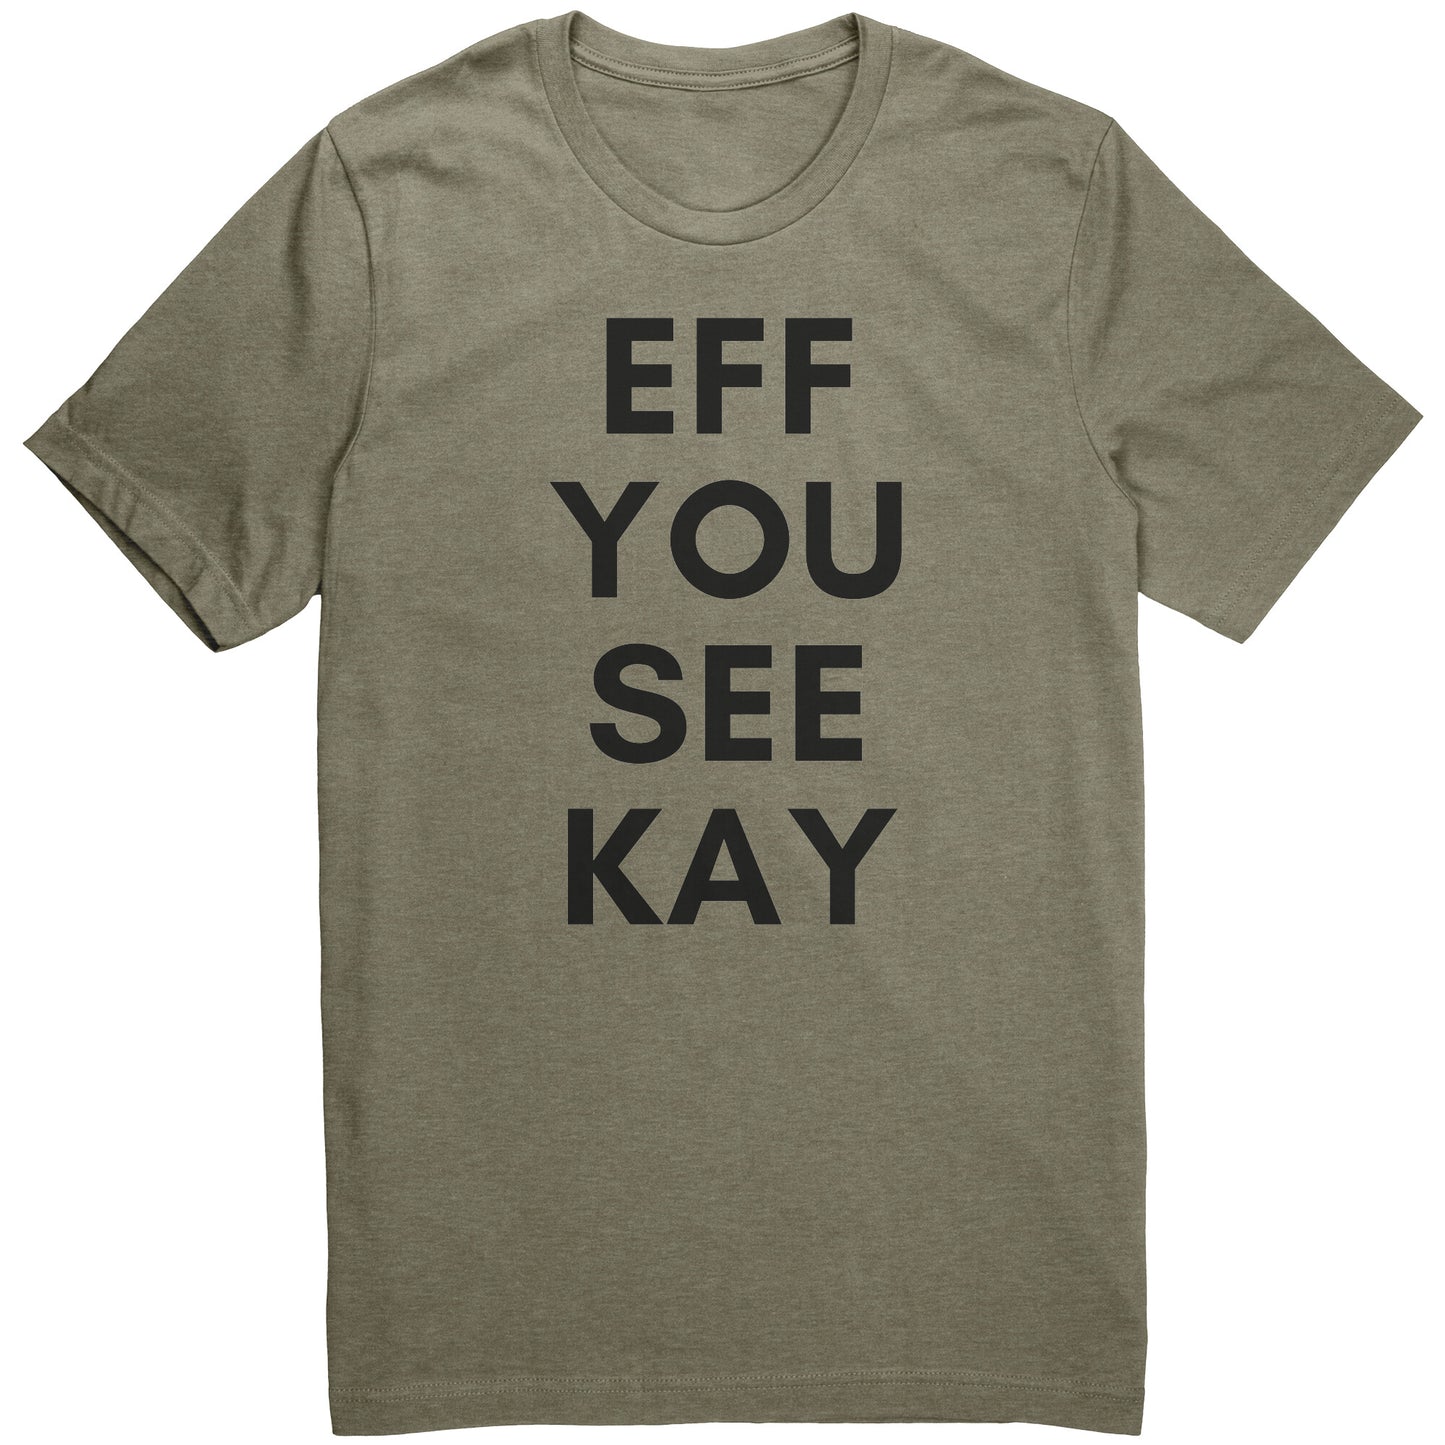 Eff You See Kay Tee